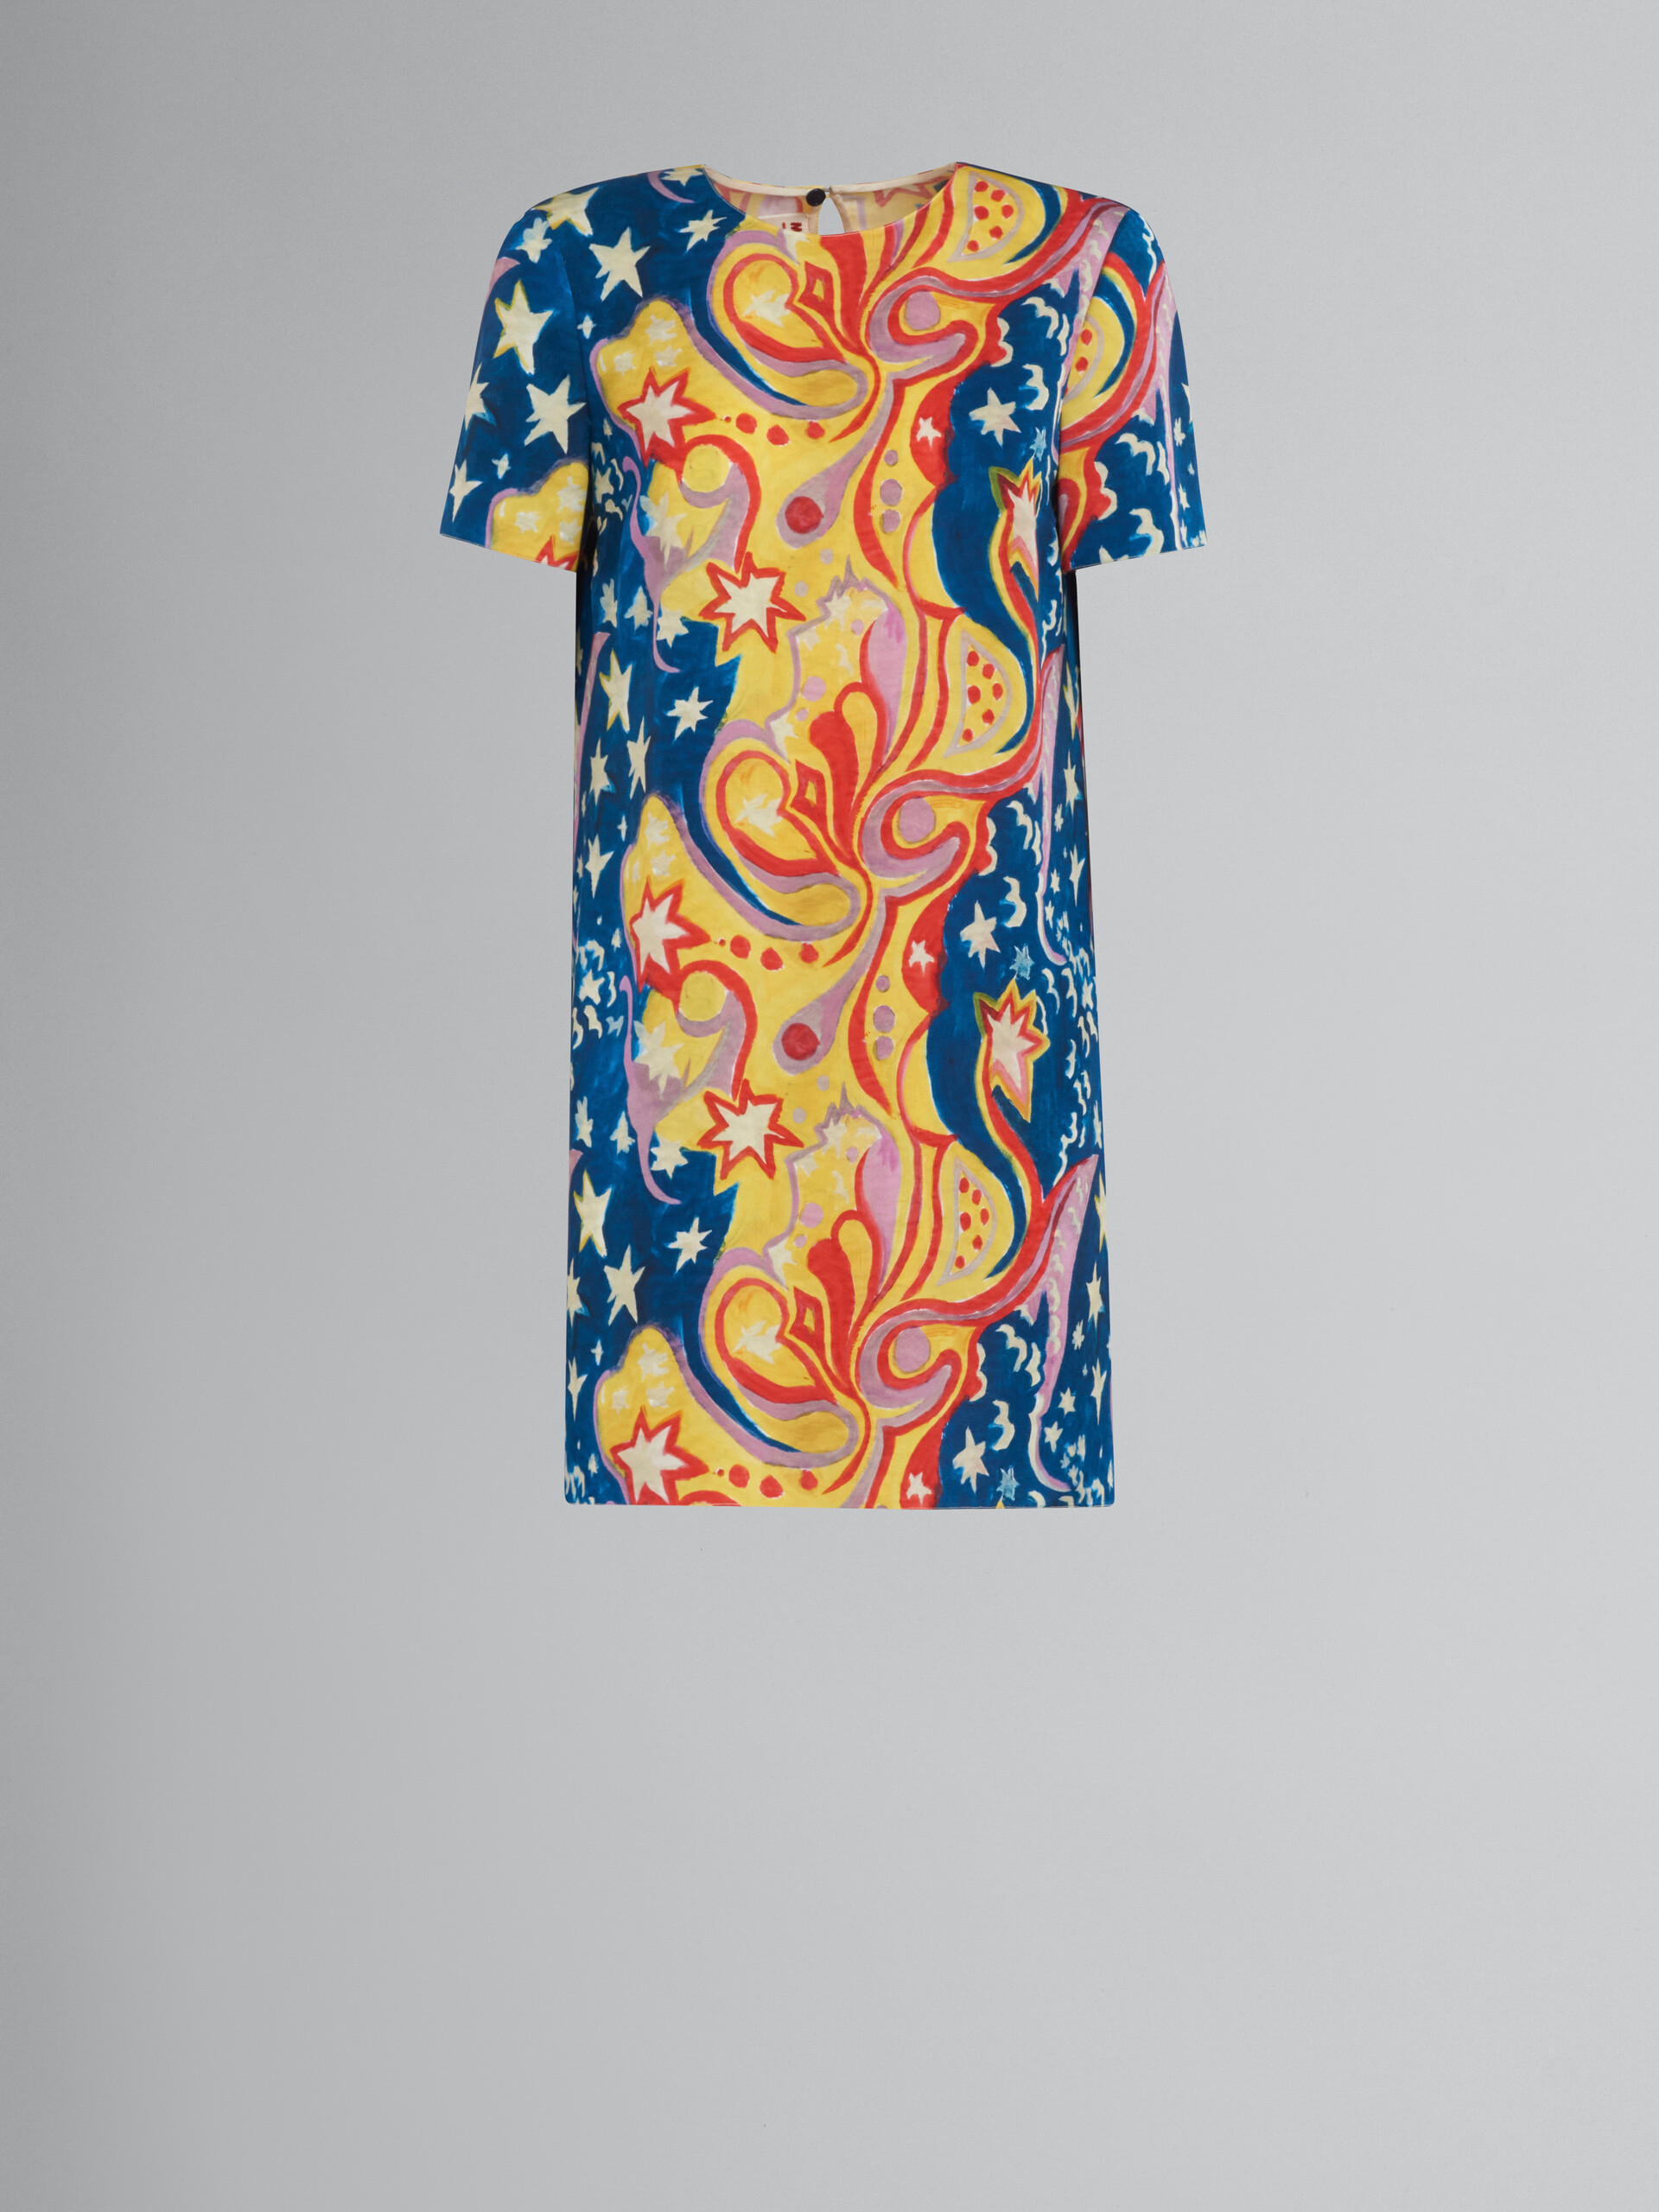 Marni x No Vacancy Inn - Multicolor satin short dress with Galactic Paradise print - Dresses - Image 1